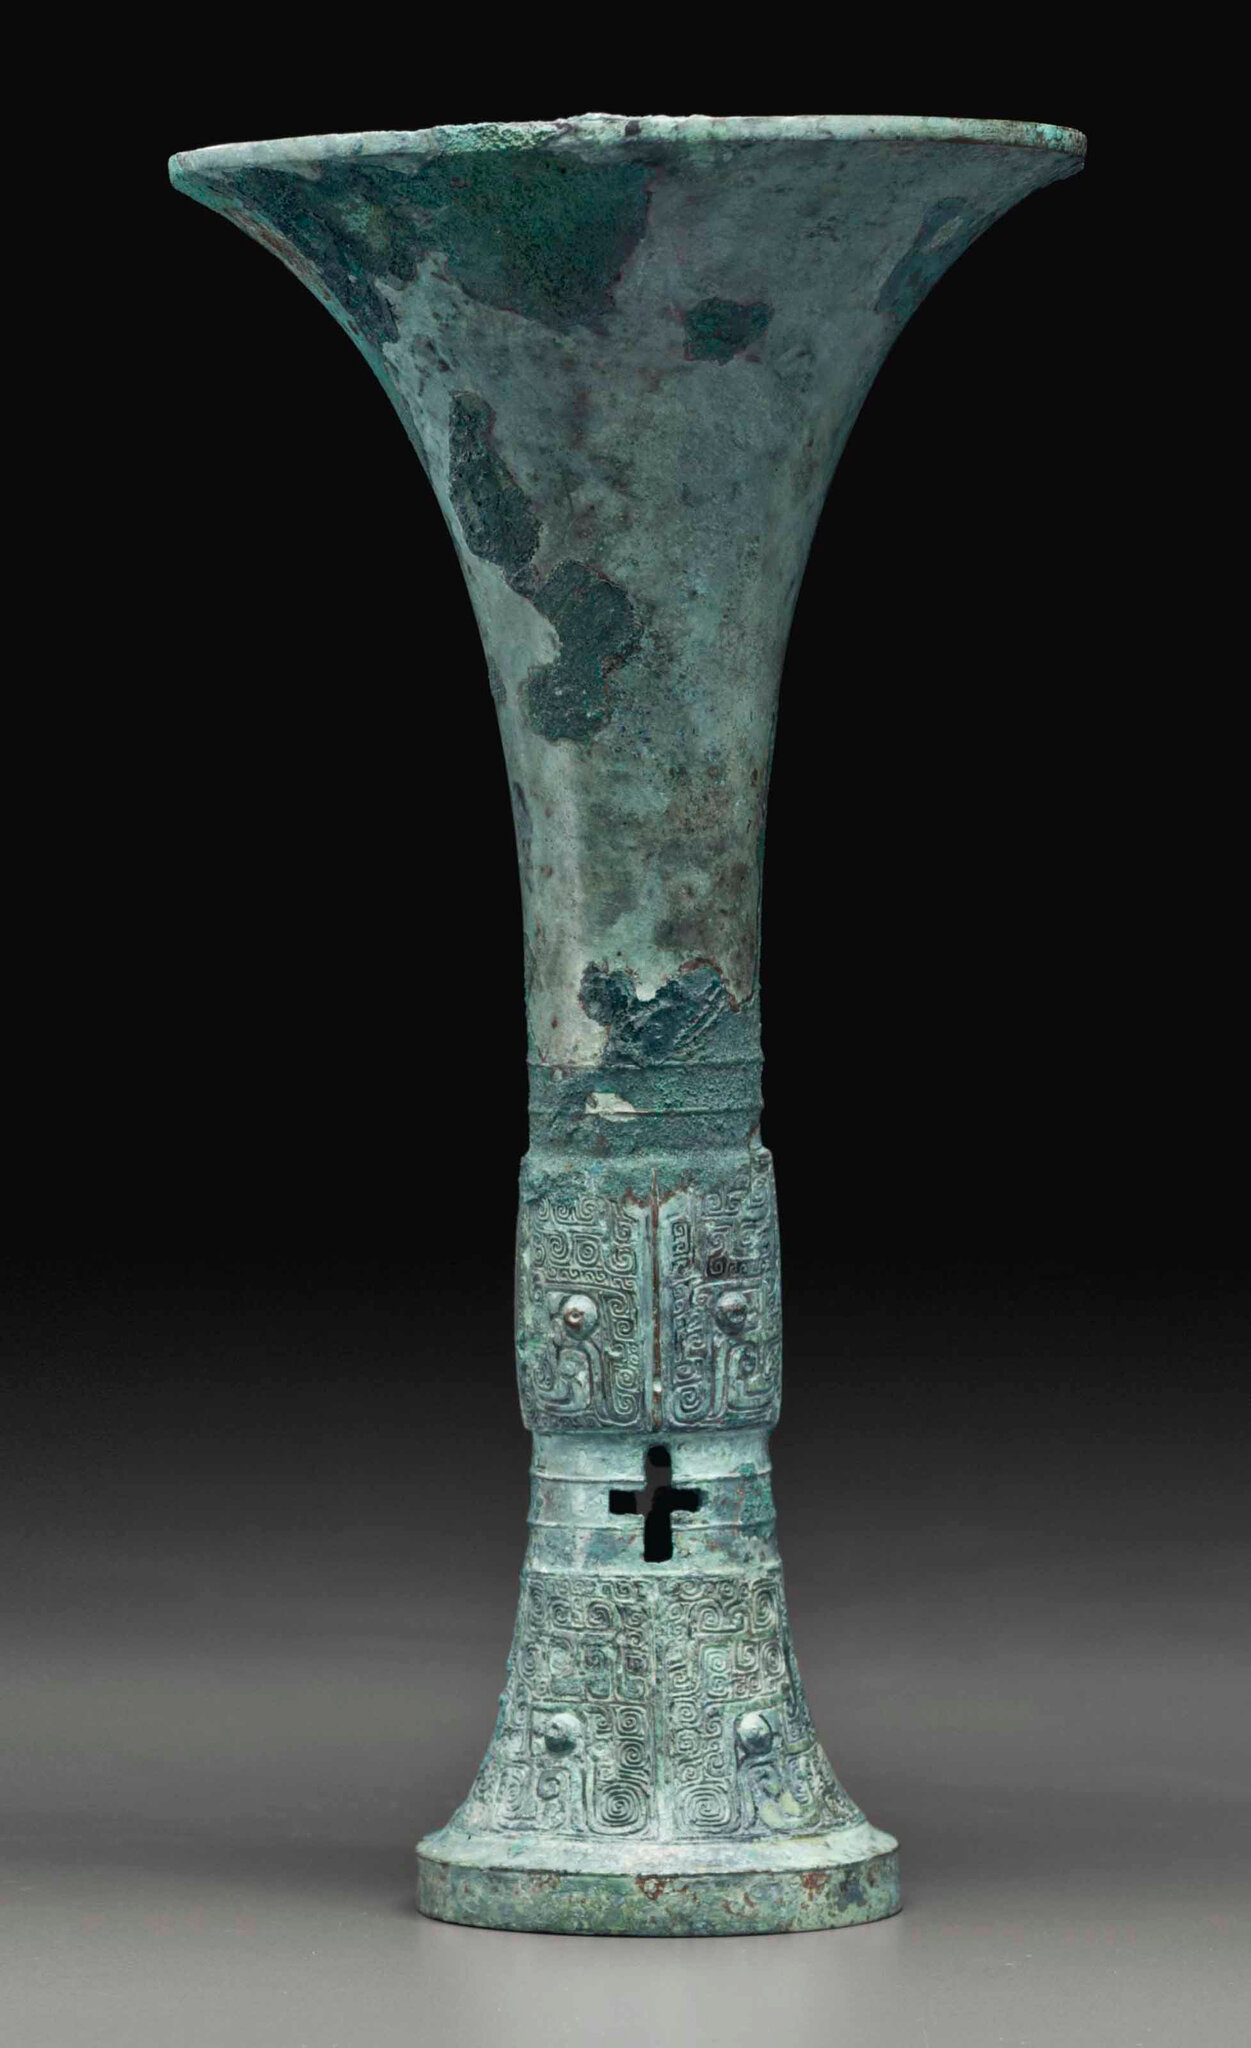 An archaic bronze ritual tripod wine vesse, gu, Late Shang dynasty, 12th-11th century BC